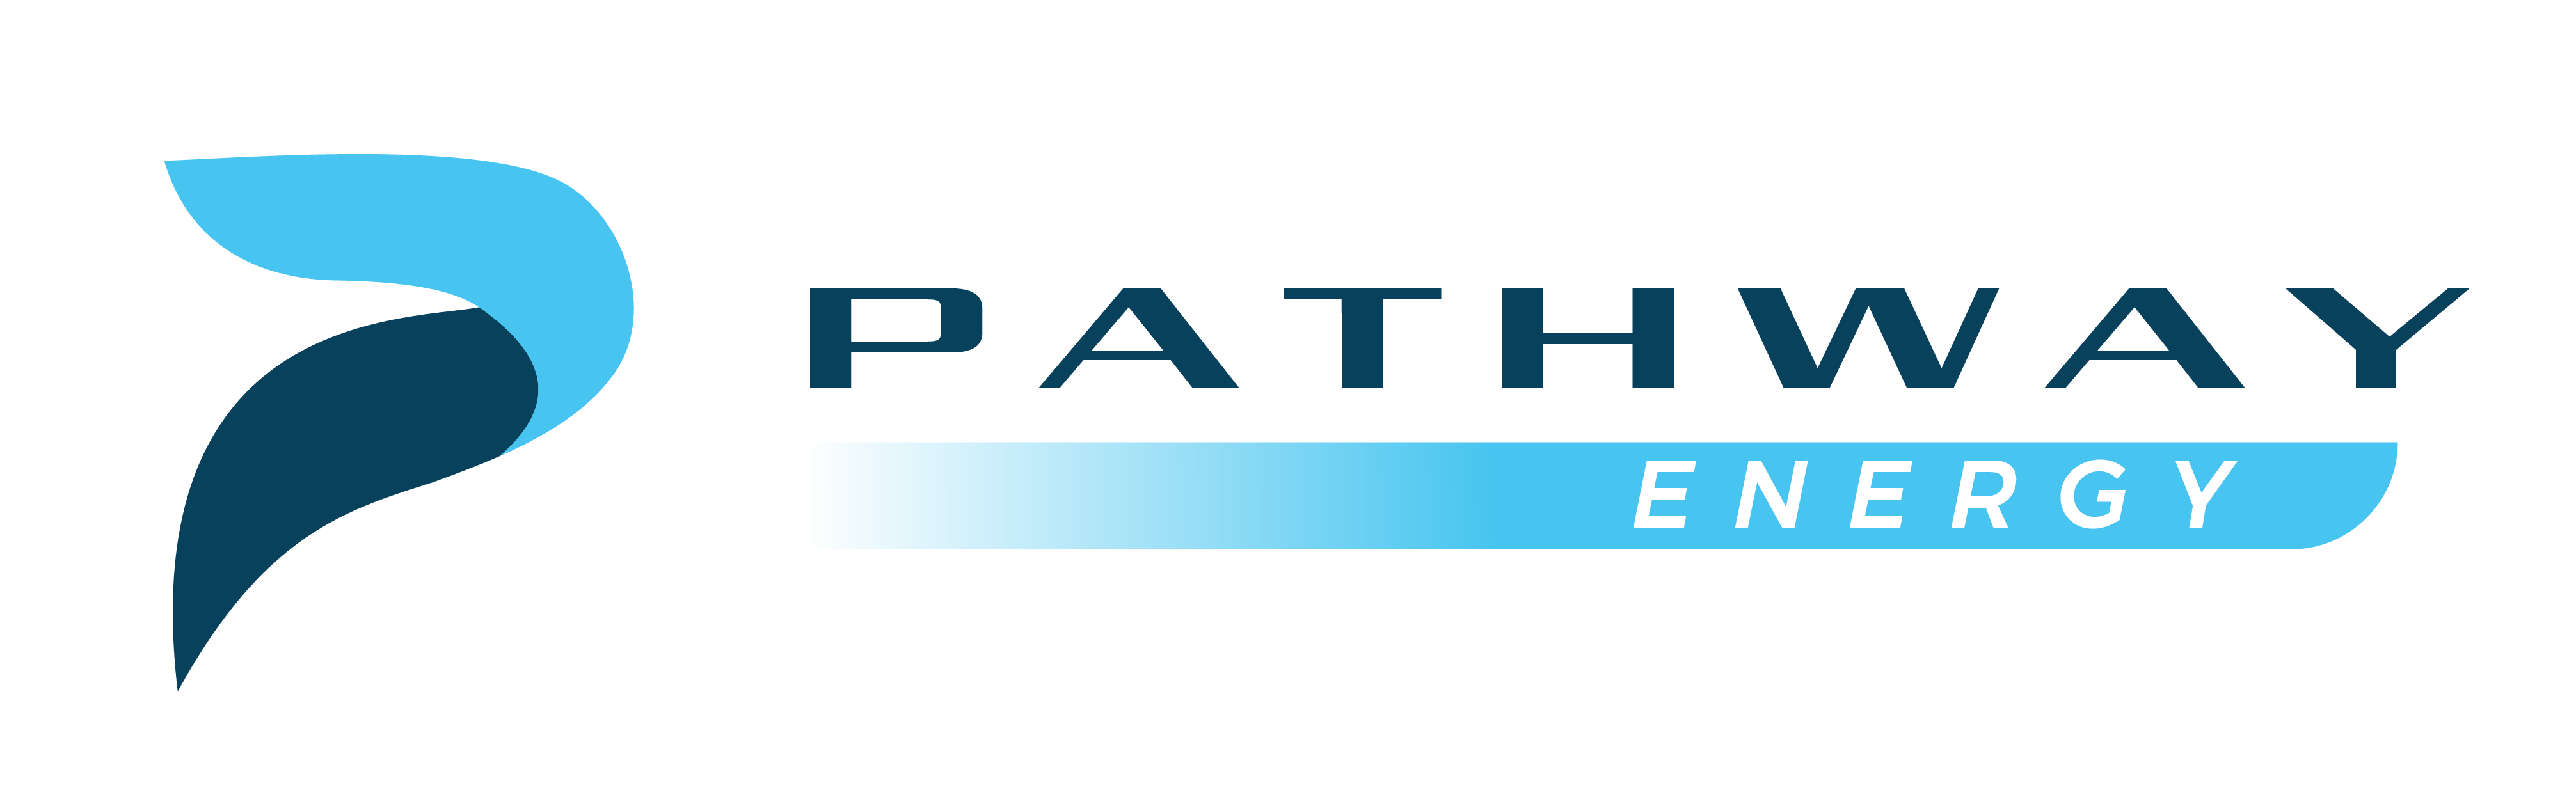 Pathway Energy